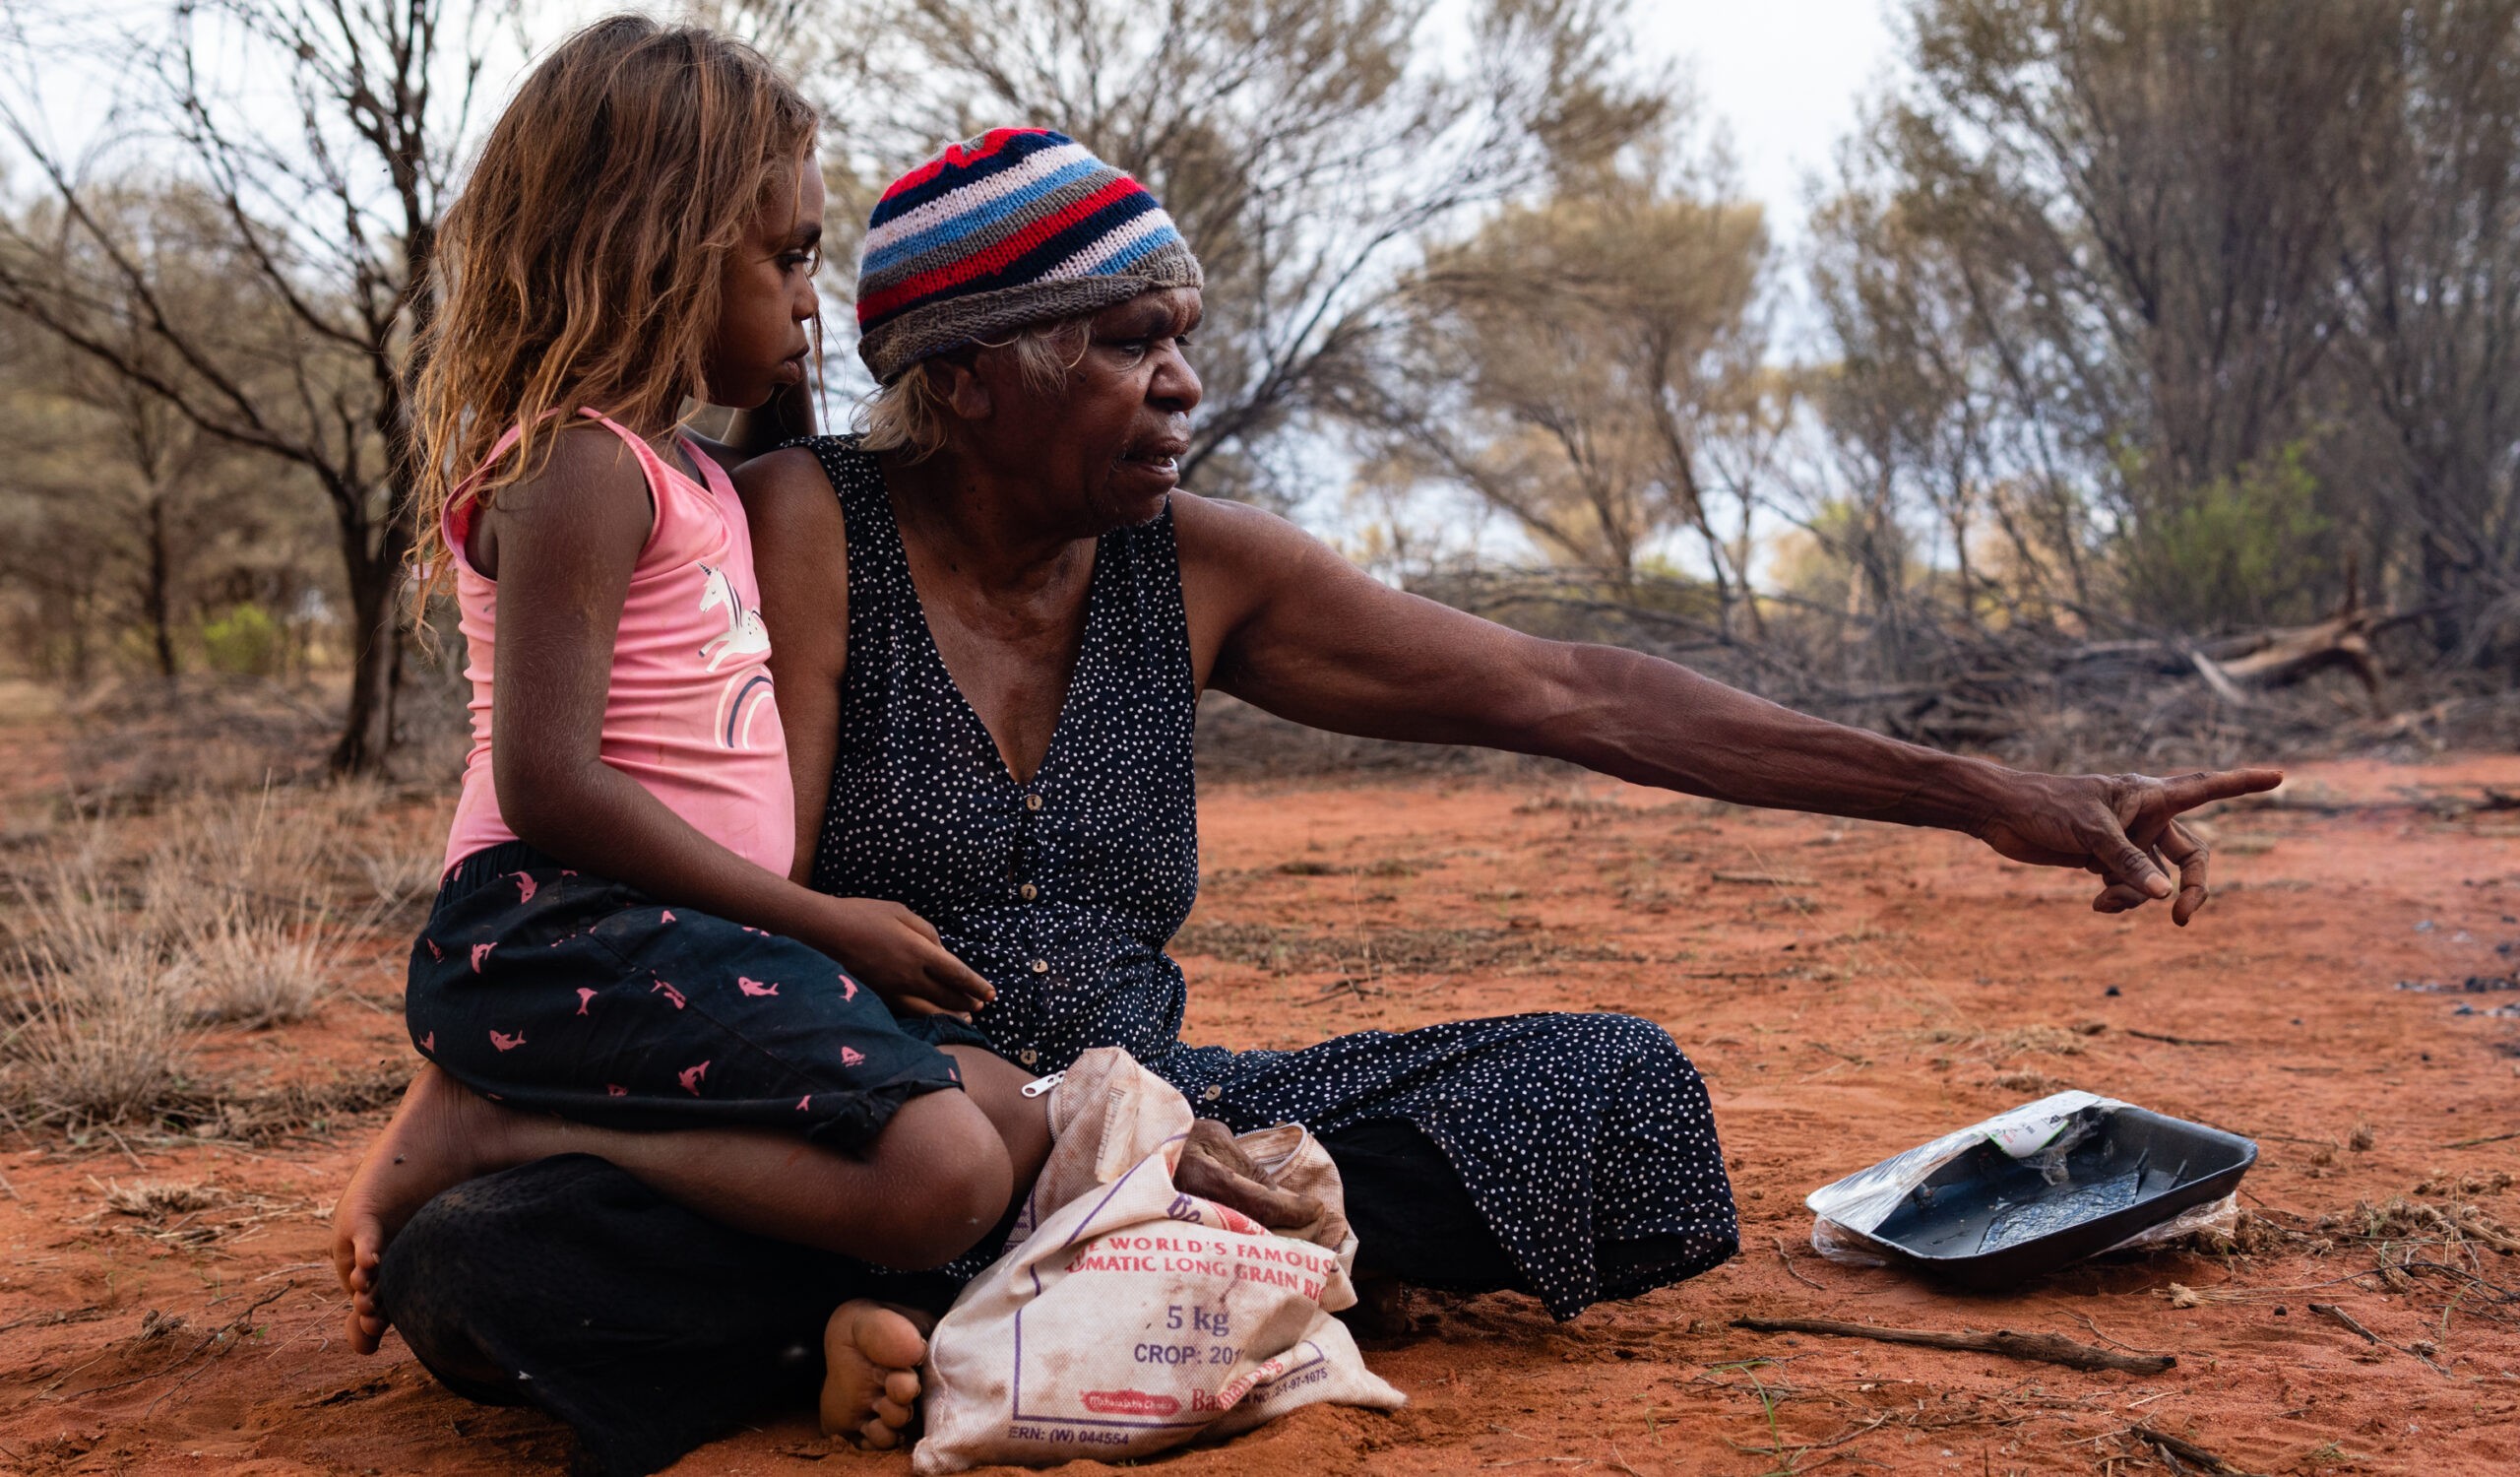 An Aboriginal woman and child are pictured in Yuendumu, NT. Credit: Di Vincenzo / Shutterstock.com